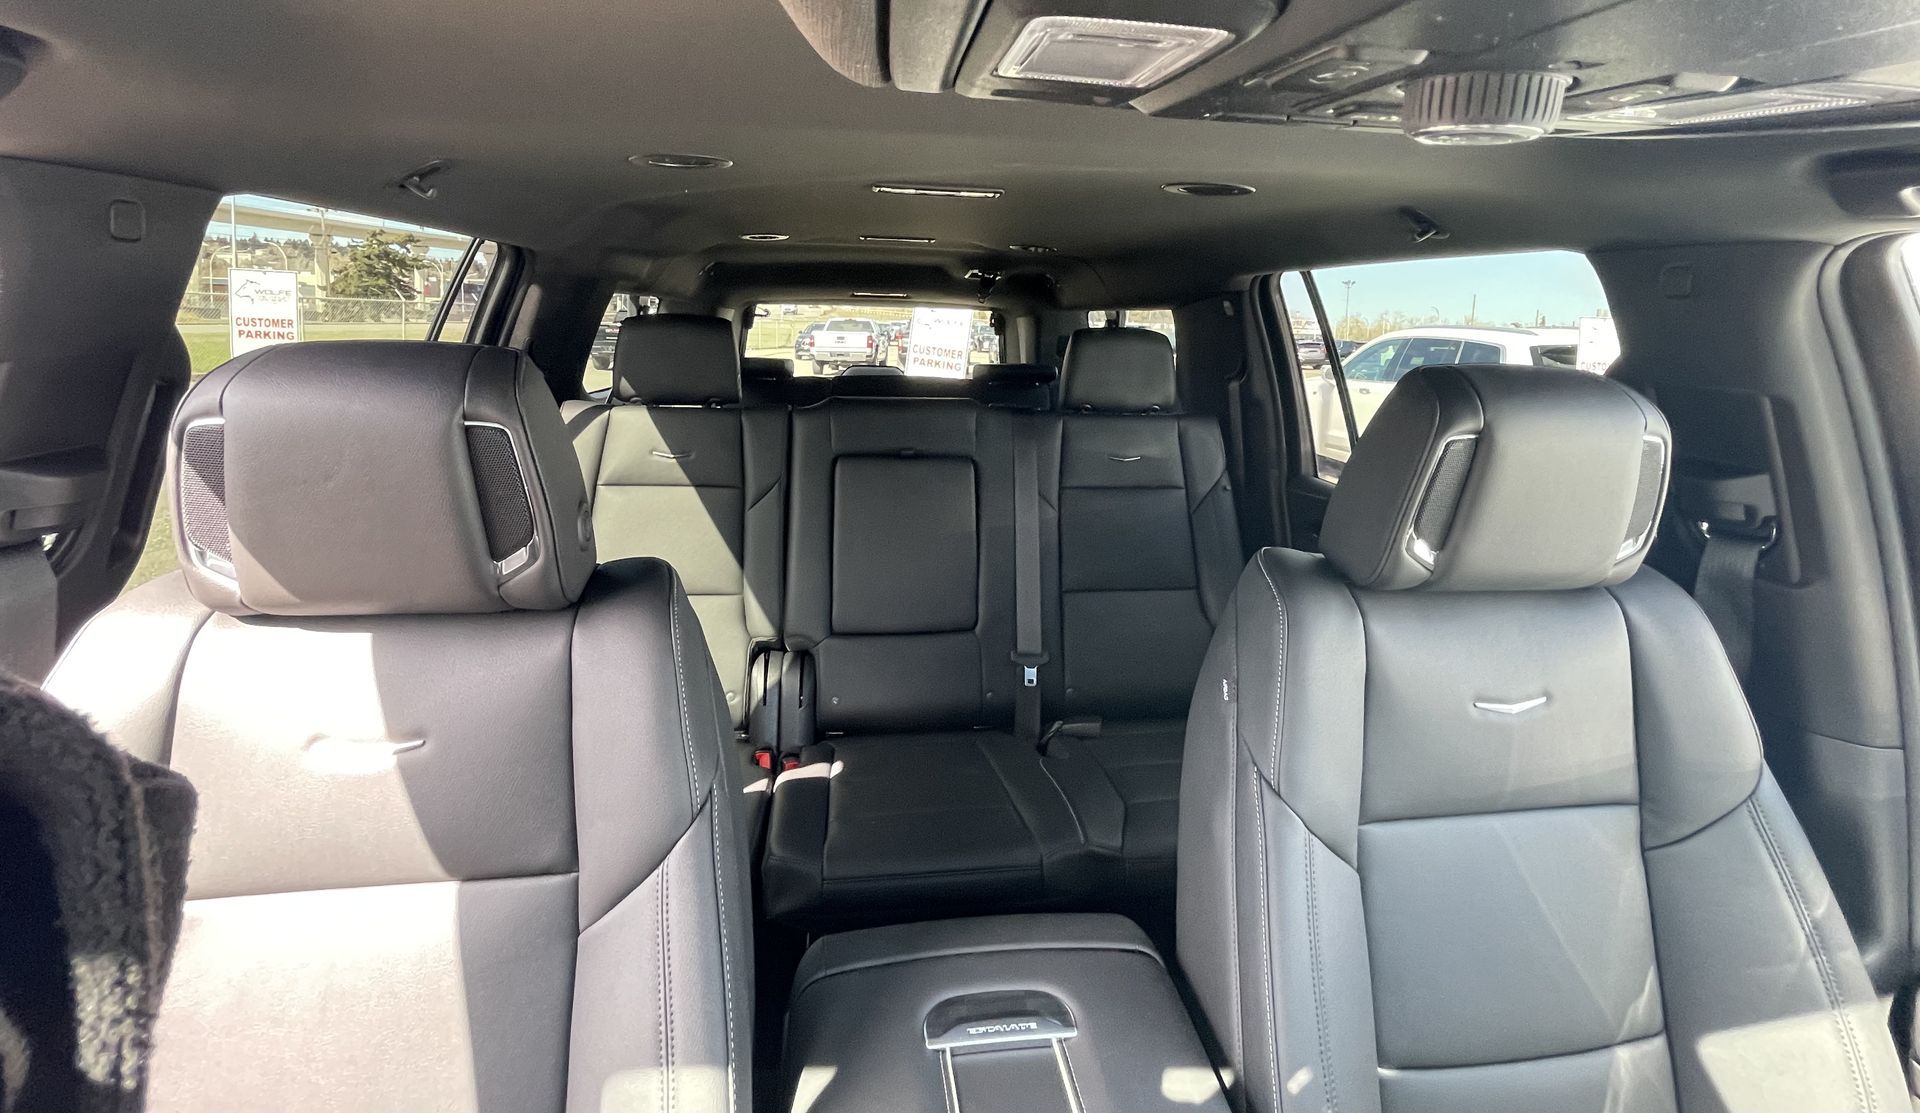 white Limo To Go Cadillac Escalade ESV interior seating